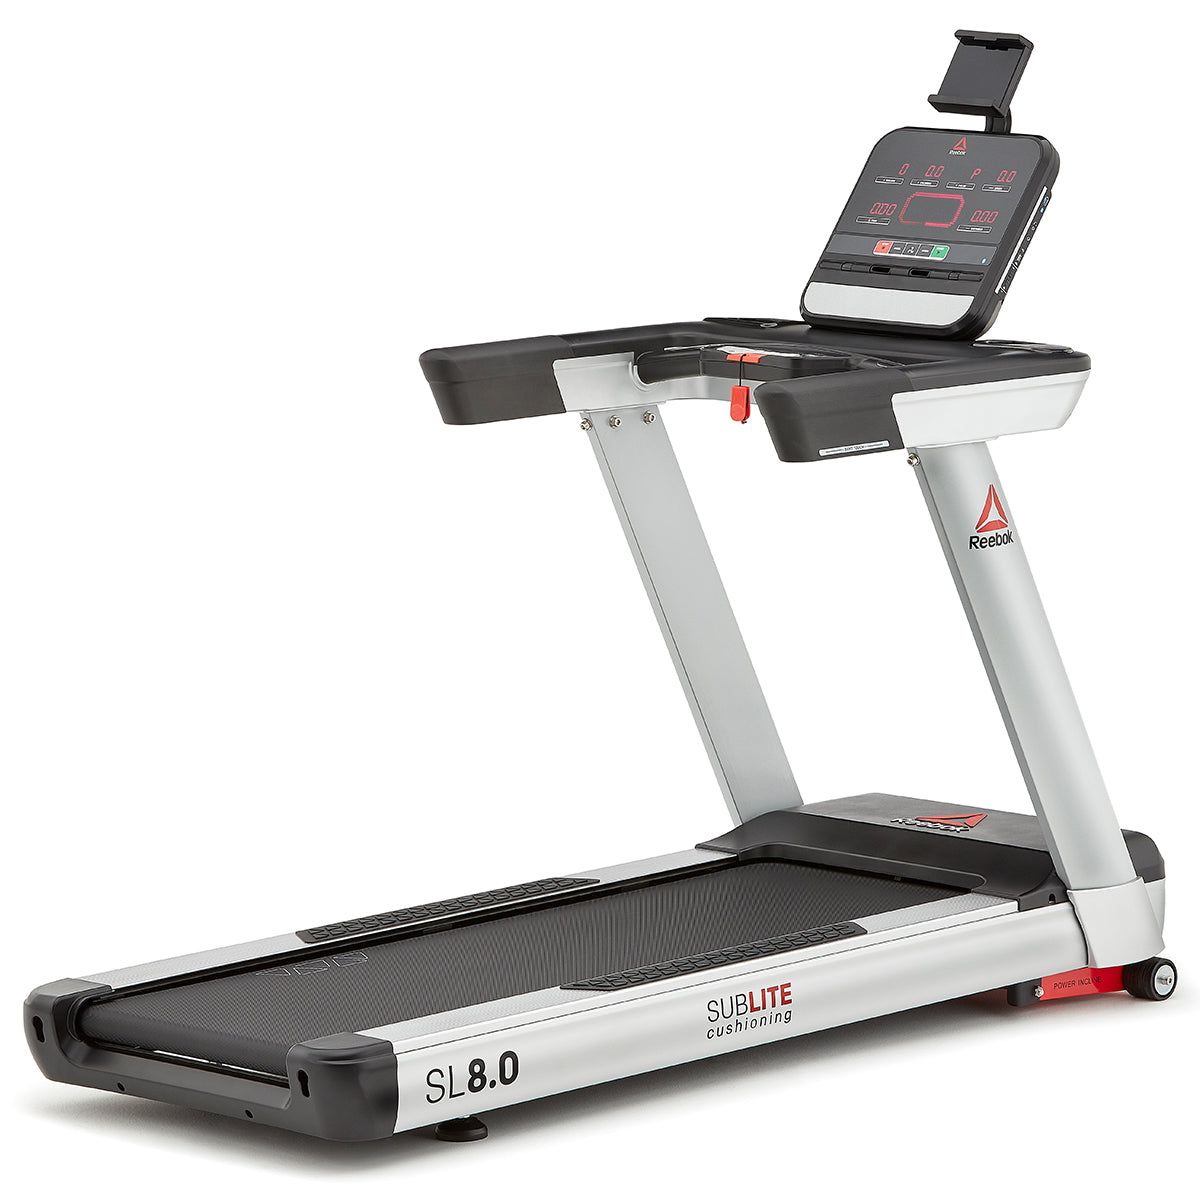 reebok s 9.8 treadmill